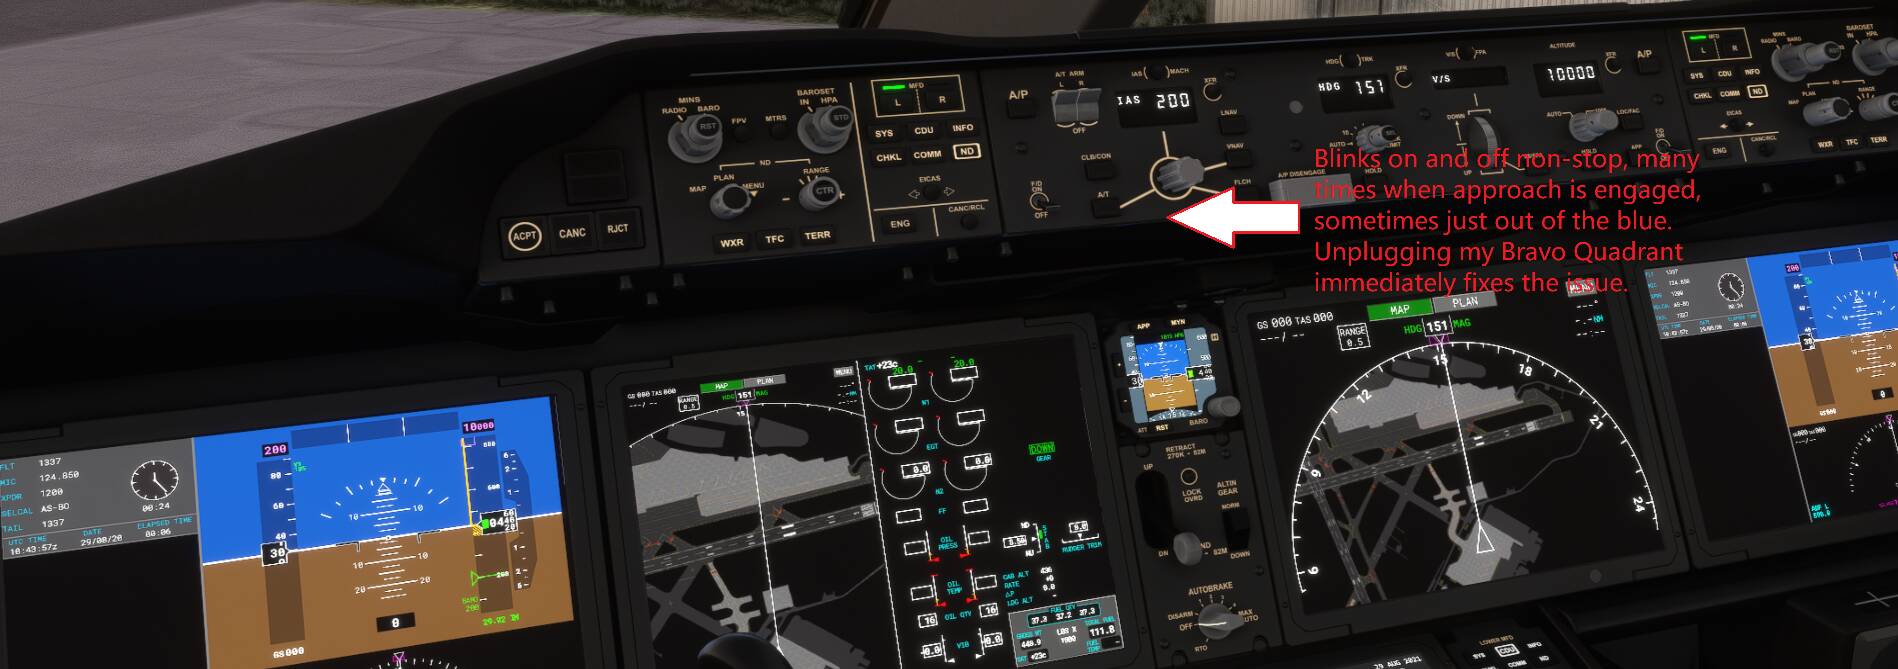 Autothrottle/IAS disengages on 787 with Bravo Quadrant - Aircraft & Systems  - Microsoft Flight Simulator Forums